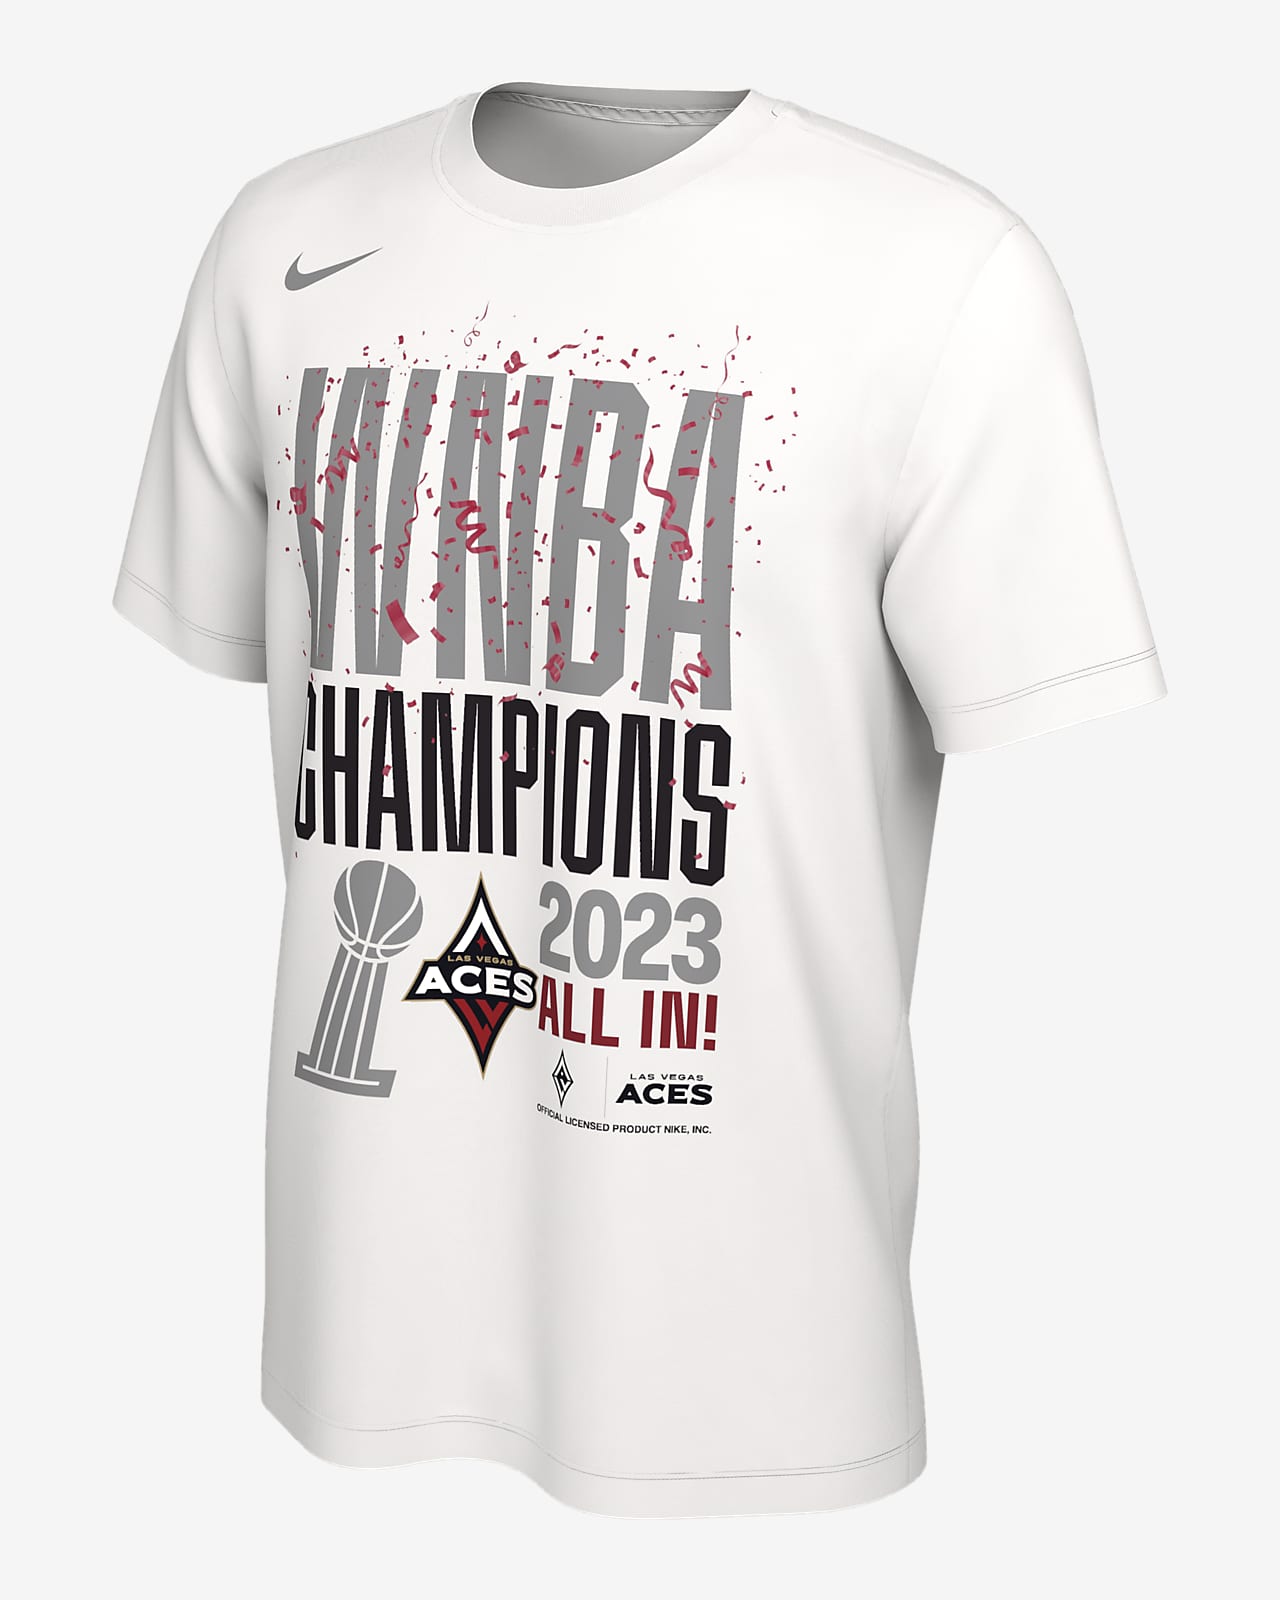 Las Vegas Aces Back to Back Champions WNBA 2023 tee Shirt, hoodie,  sweatshirt for men and women